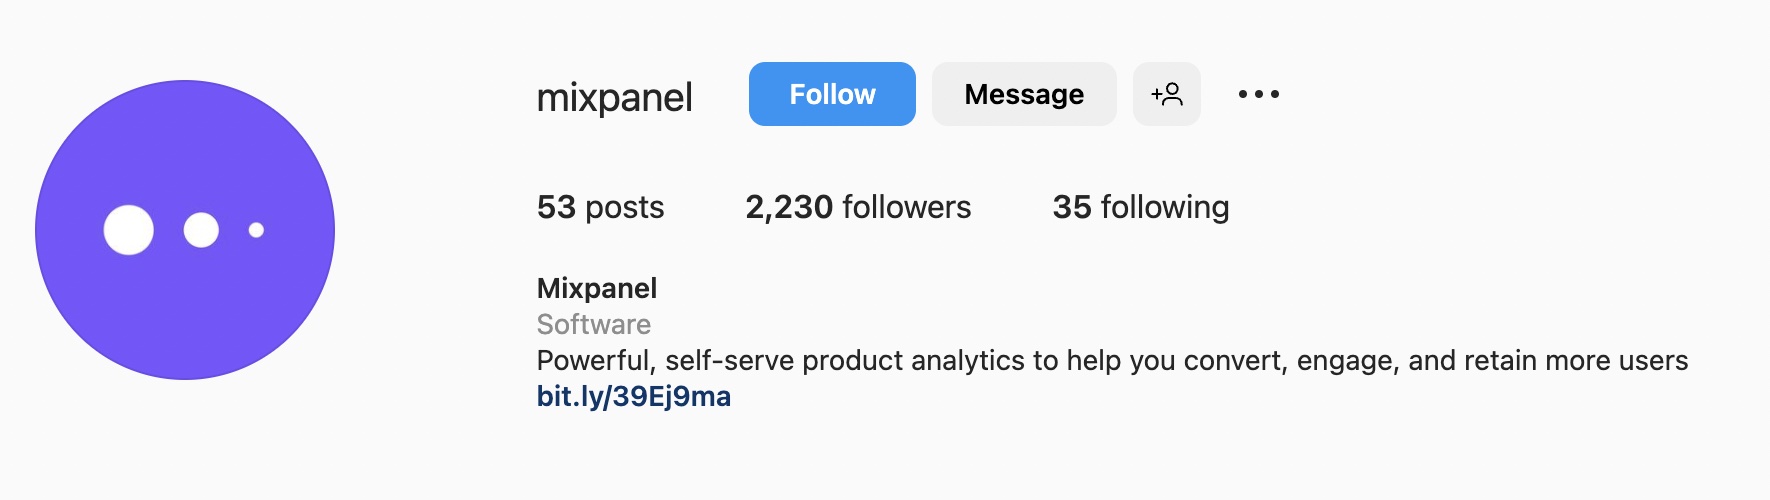 SaaS ビジネス向けのシンプルな Instagram バイオのアイデア、mixpanel